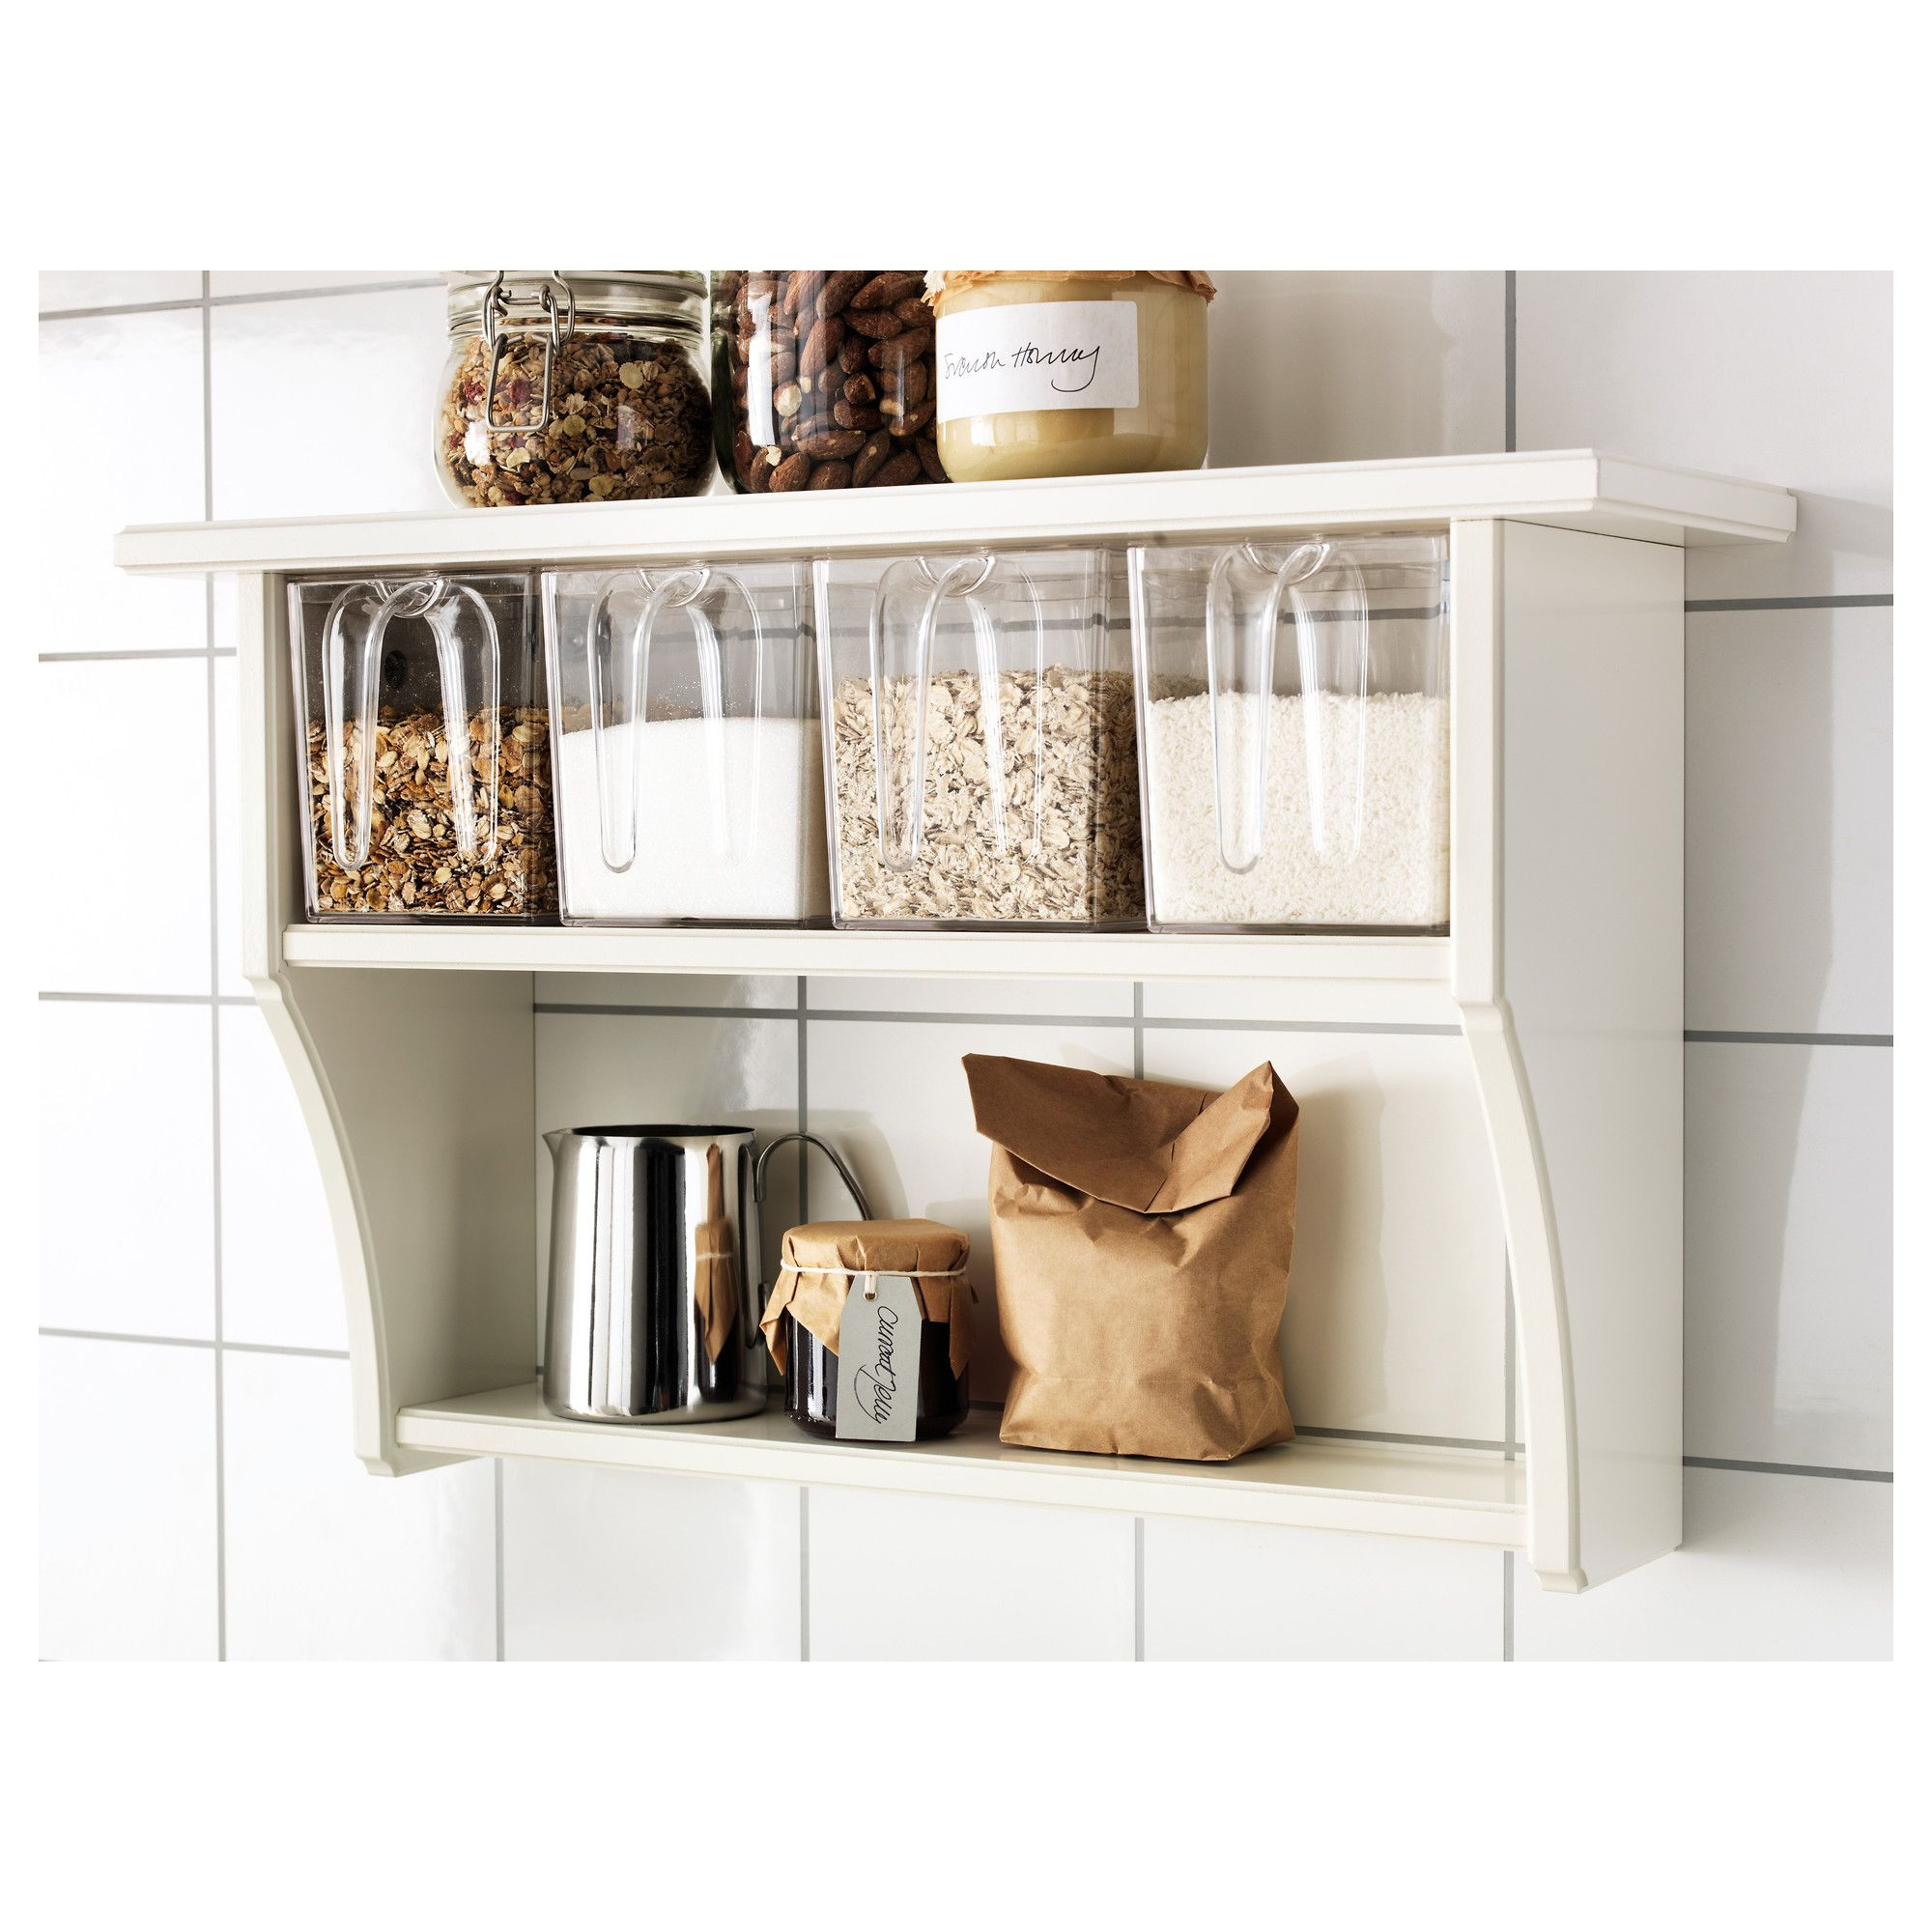 Ikea Kitchen Wall Shelves
 Furniture and Home Furnishings